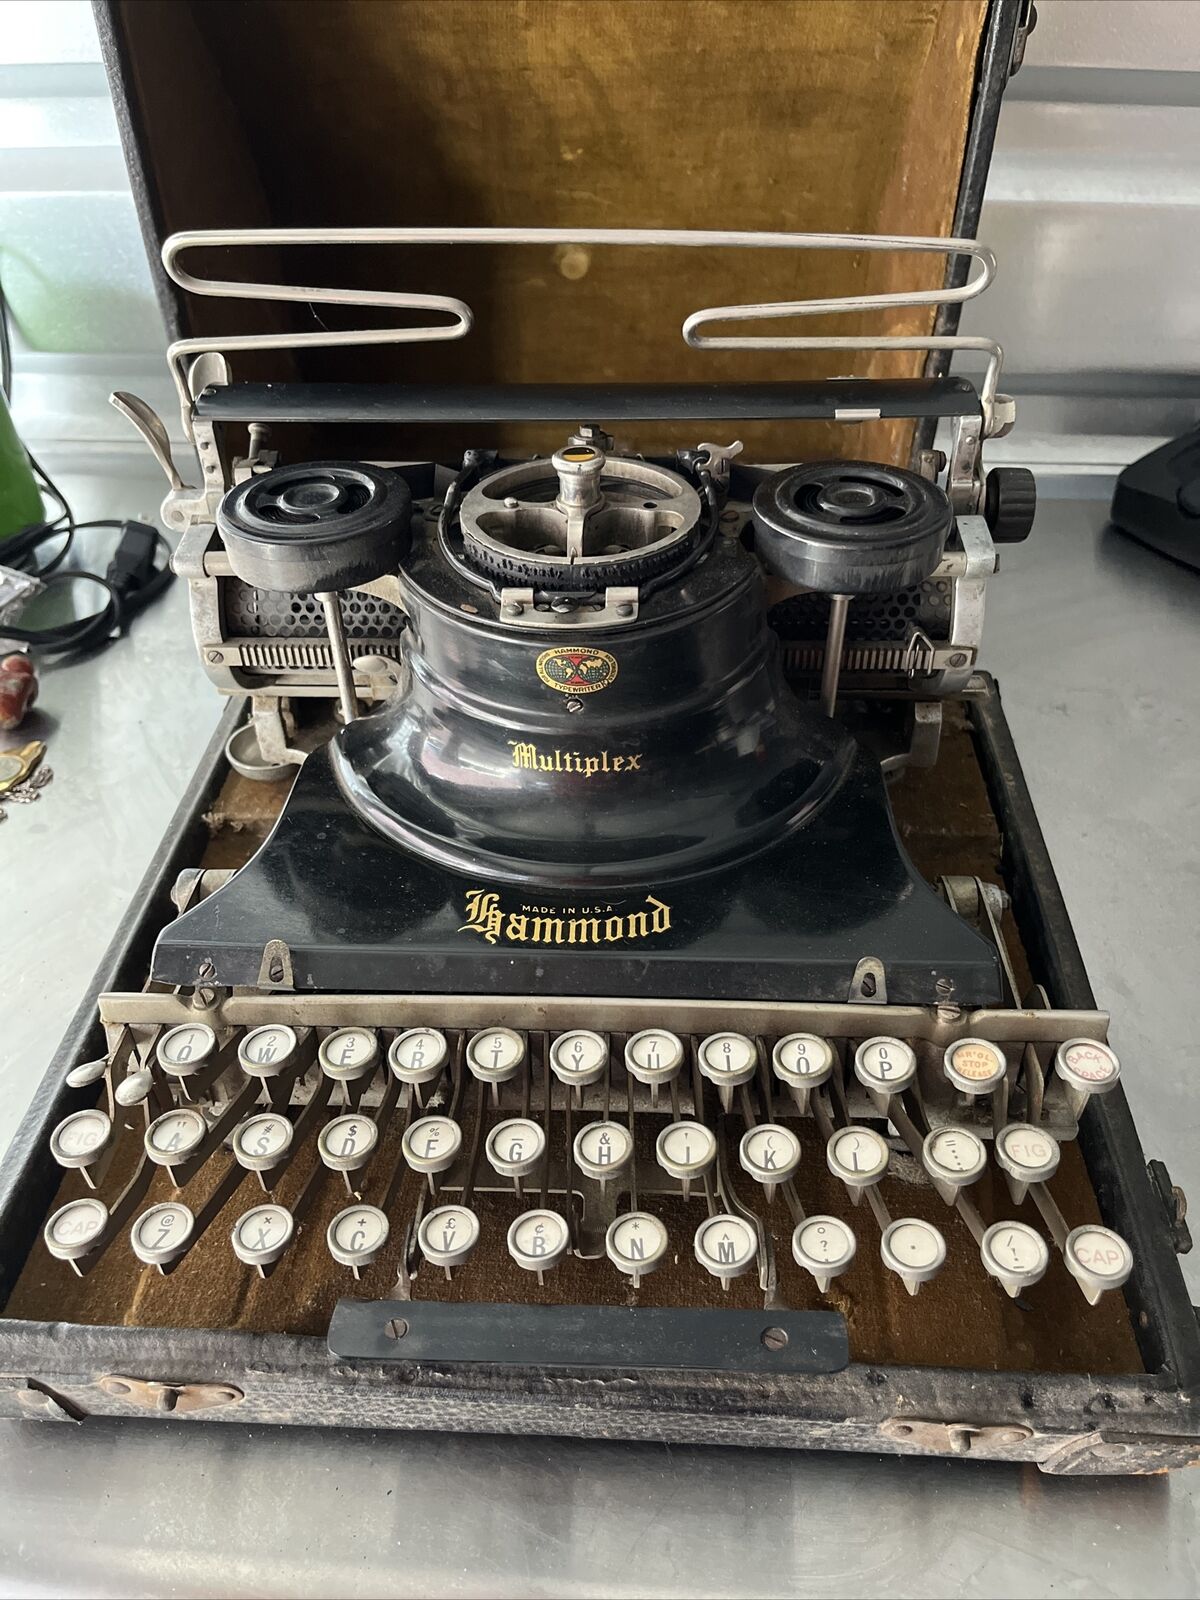 1920 HAMMOND MULTIPLEX FOLDING Typewriter